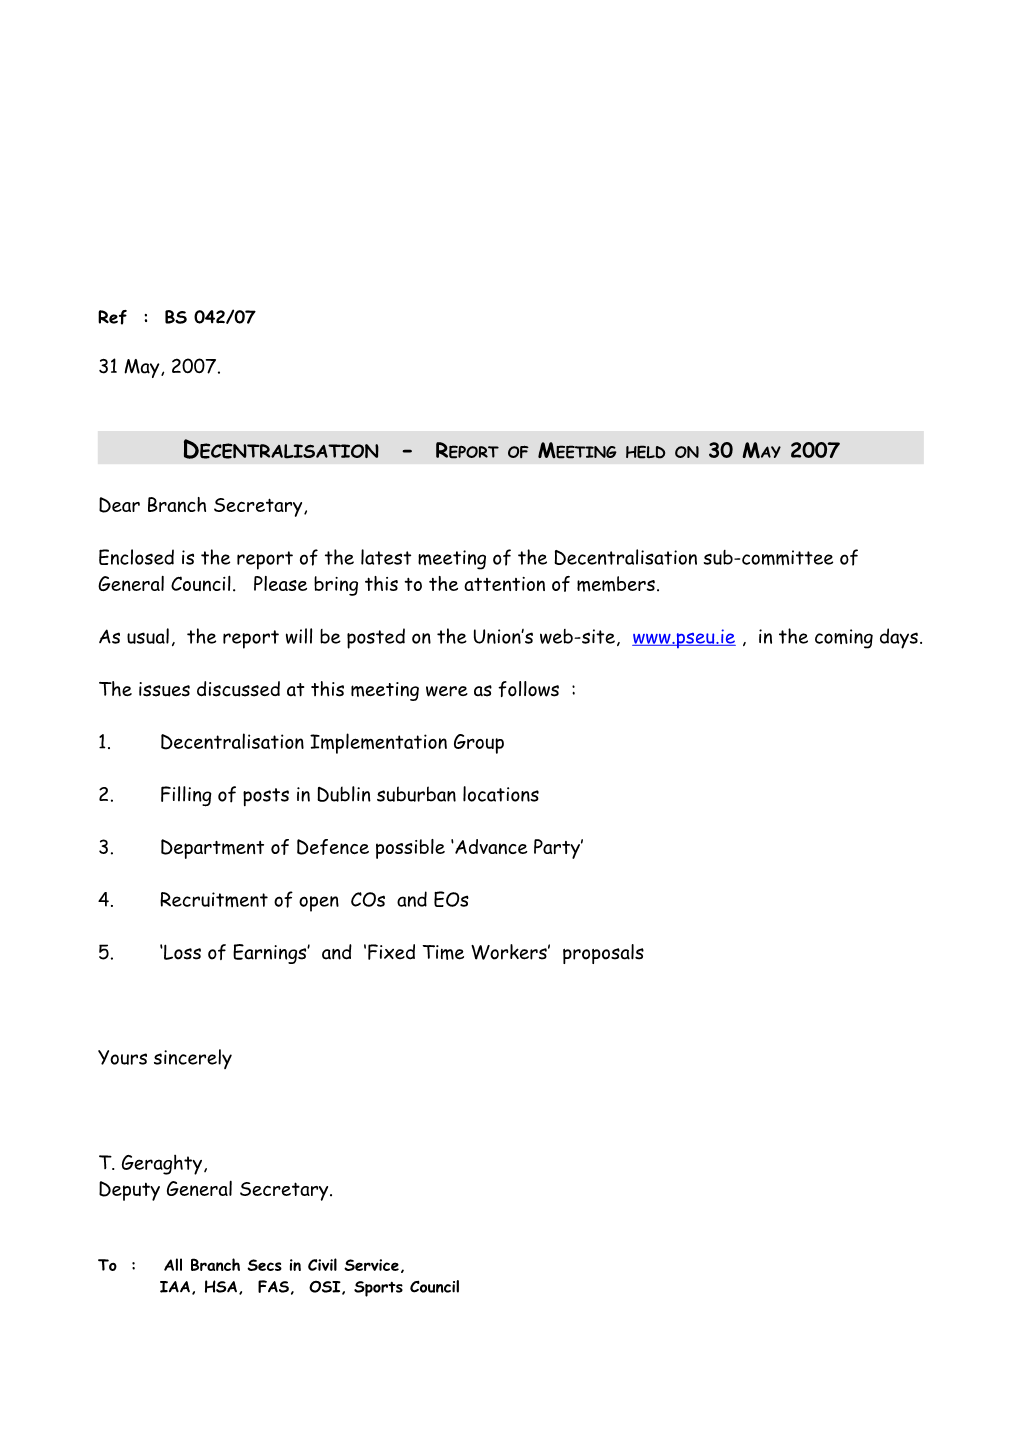 Decentralisation - Report of Meeting Held on 30 May 2007